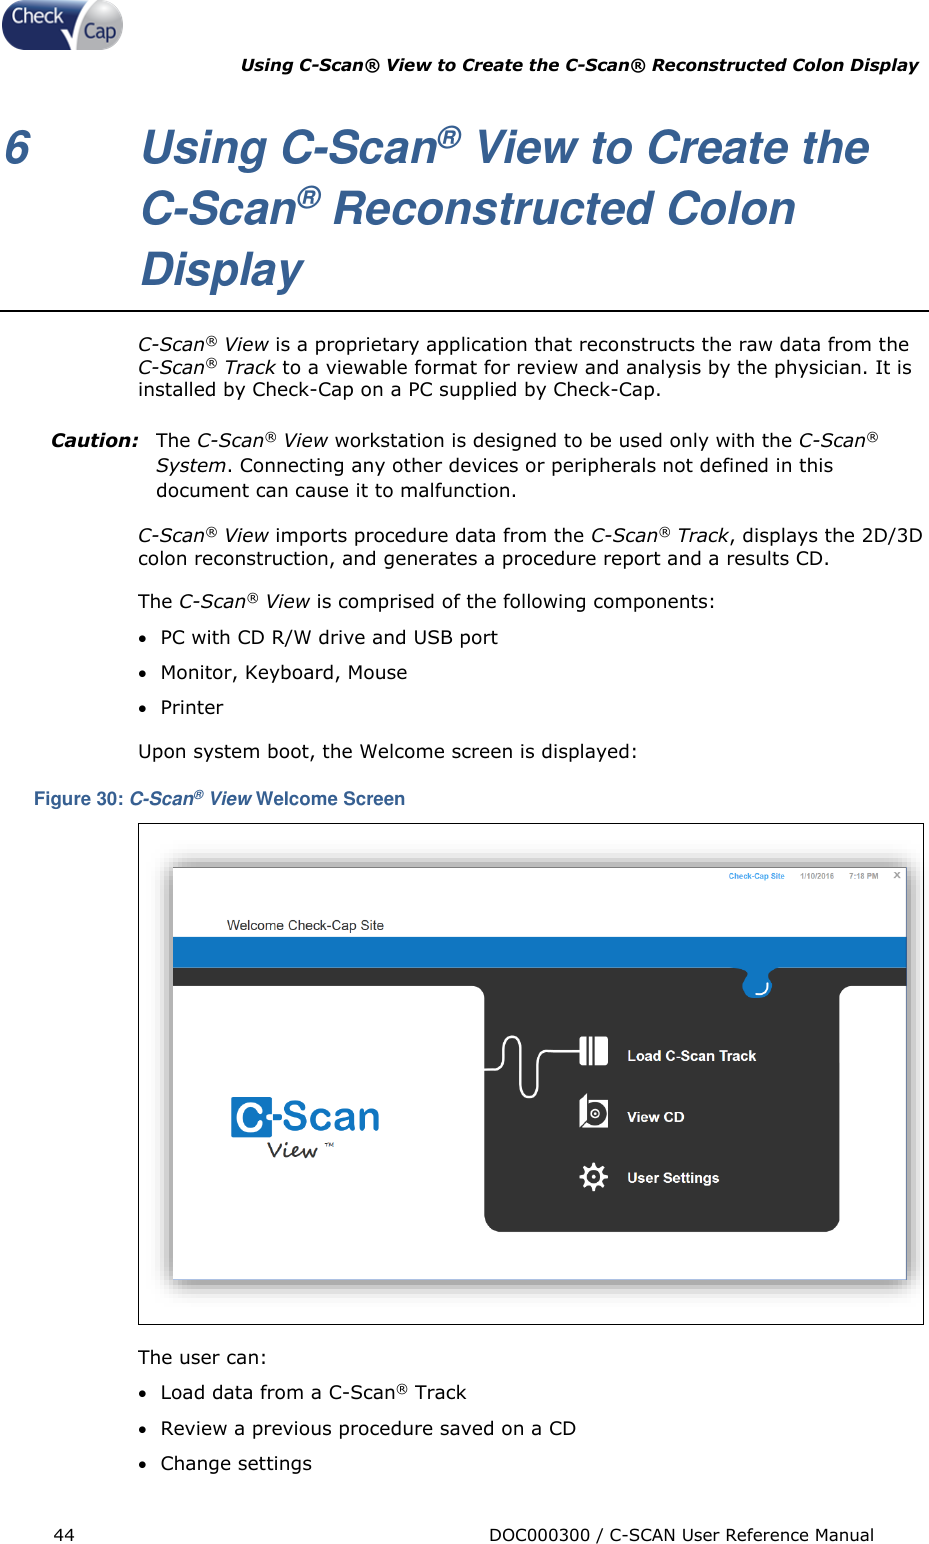 Page 44 of Check Cap CAP10007506 C-Scan Cap transceiver User Manual Title